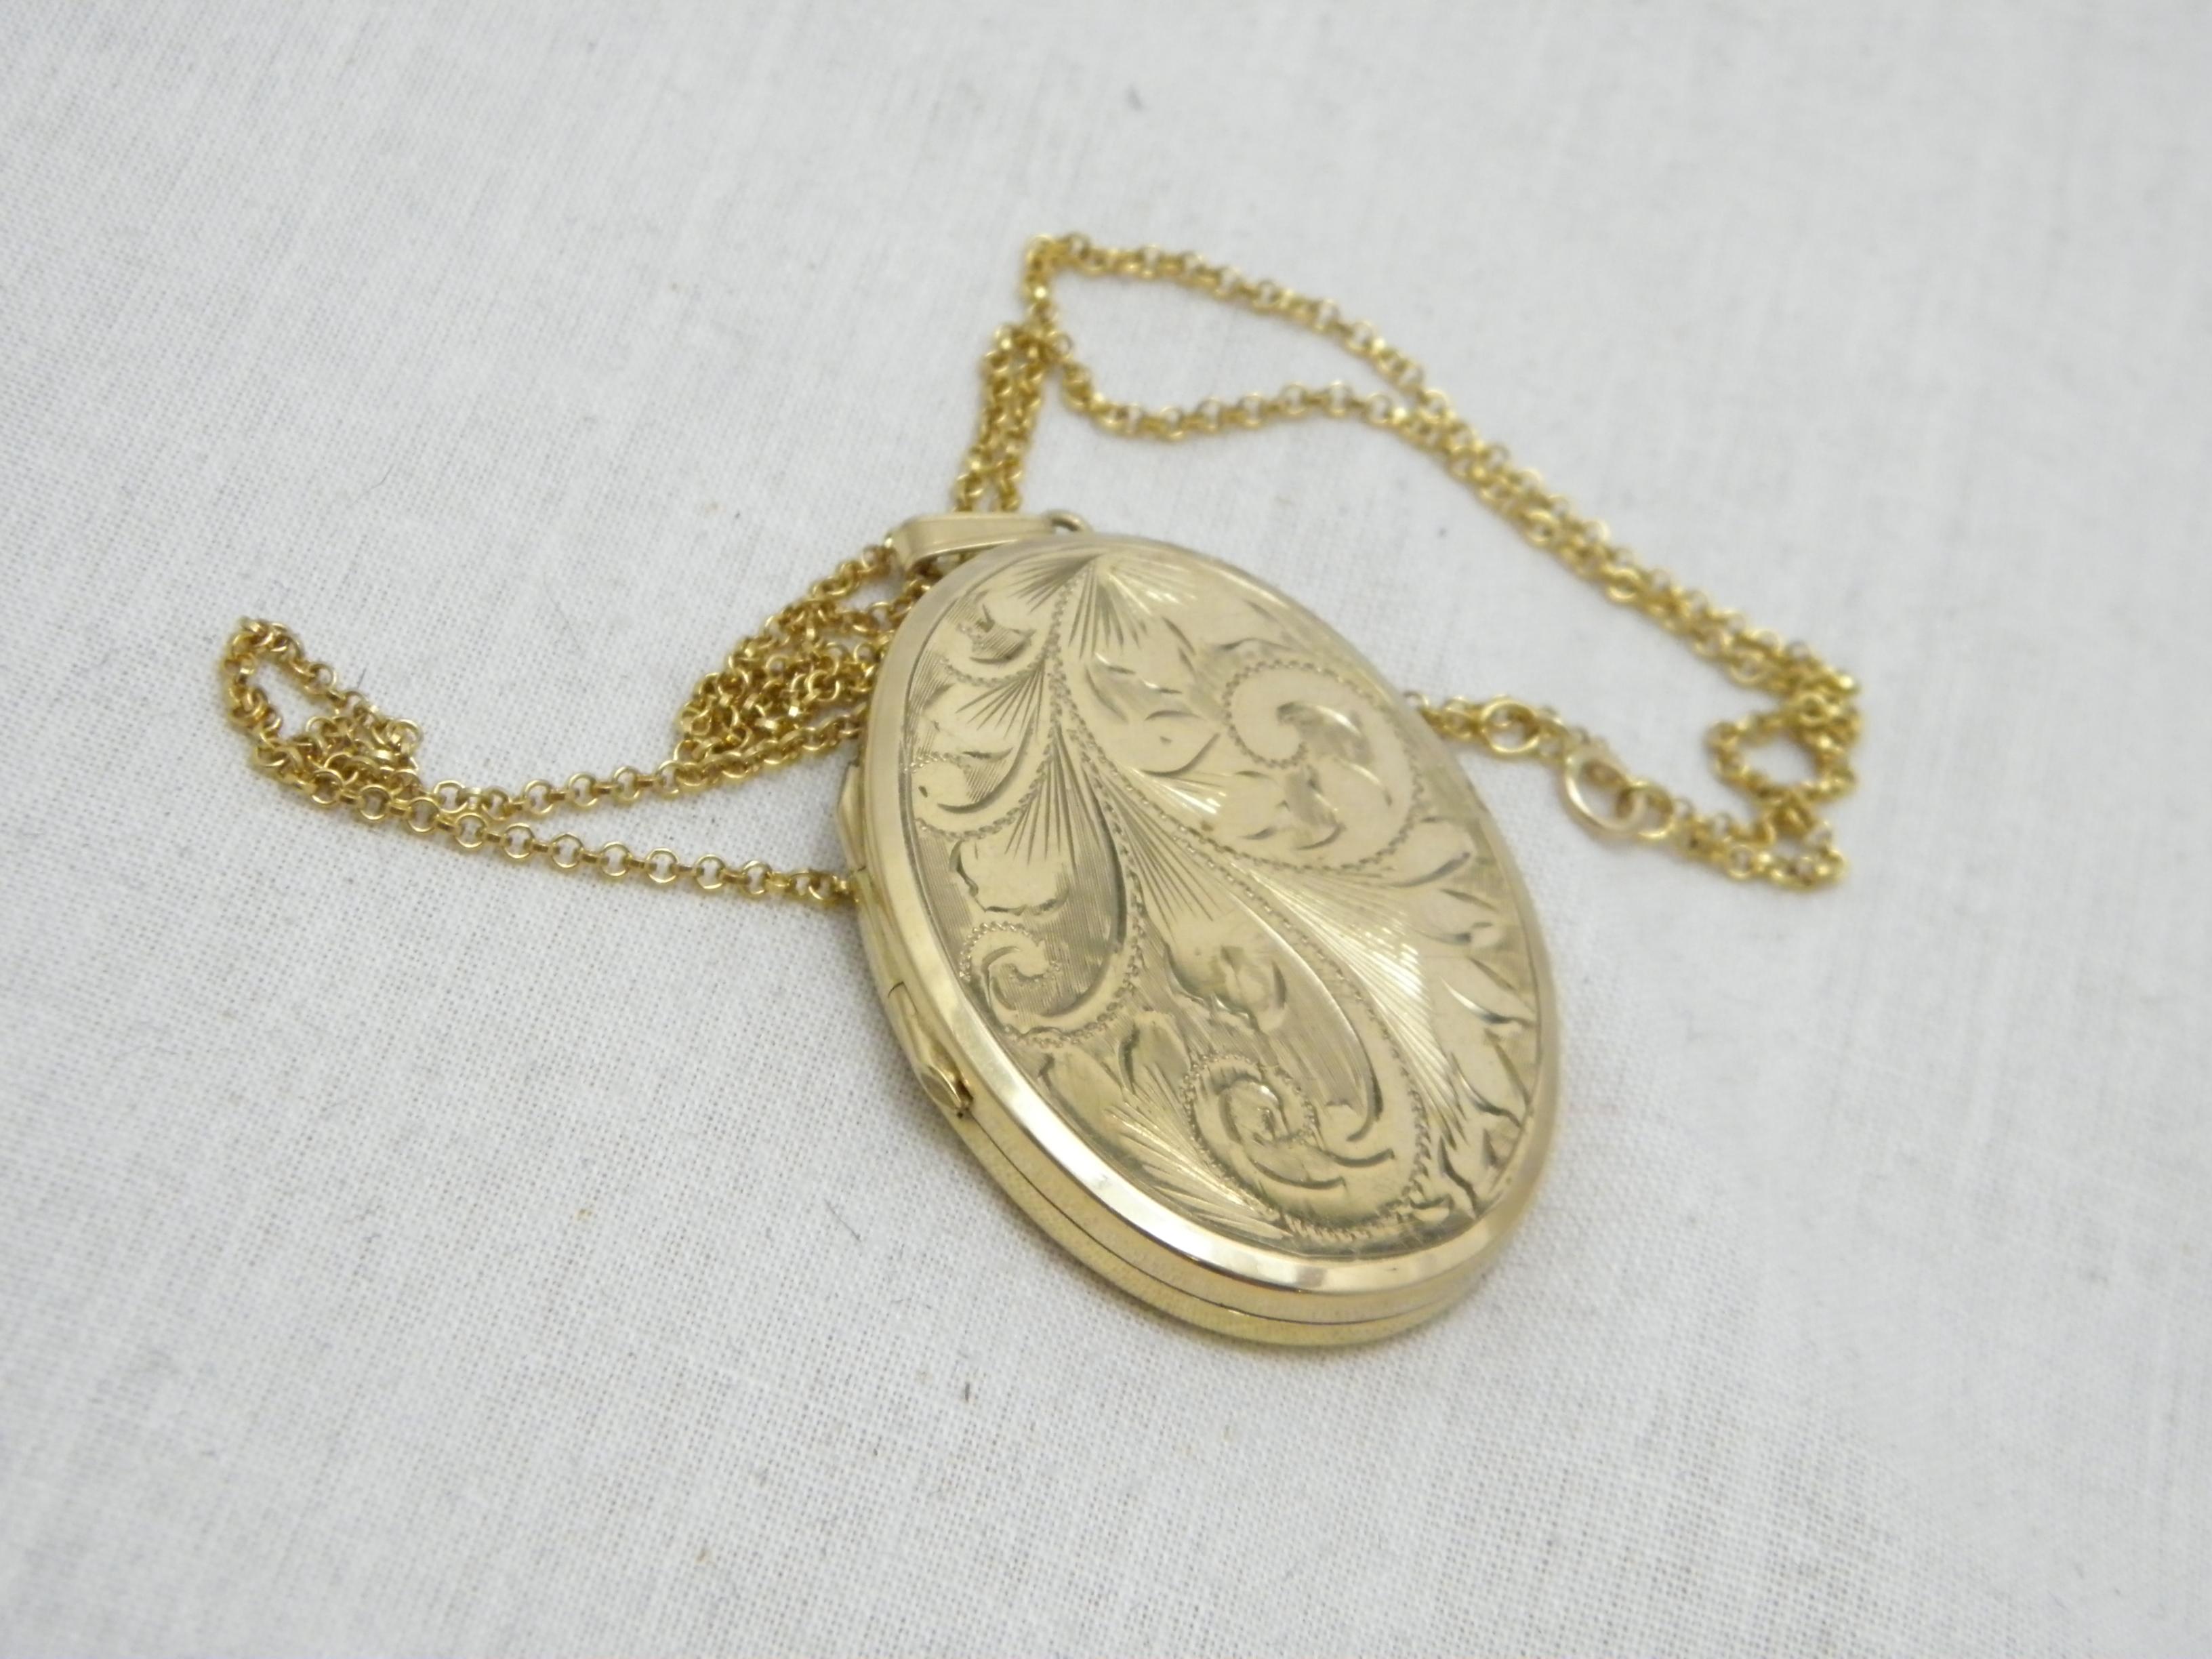 Vintage 9ct Gold Enormous Floral Locket Pendant Necklace Belcher Chain 20 Inch For Sale 5